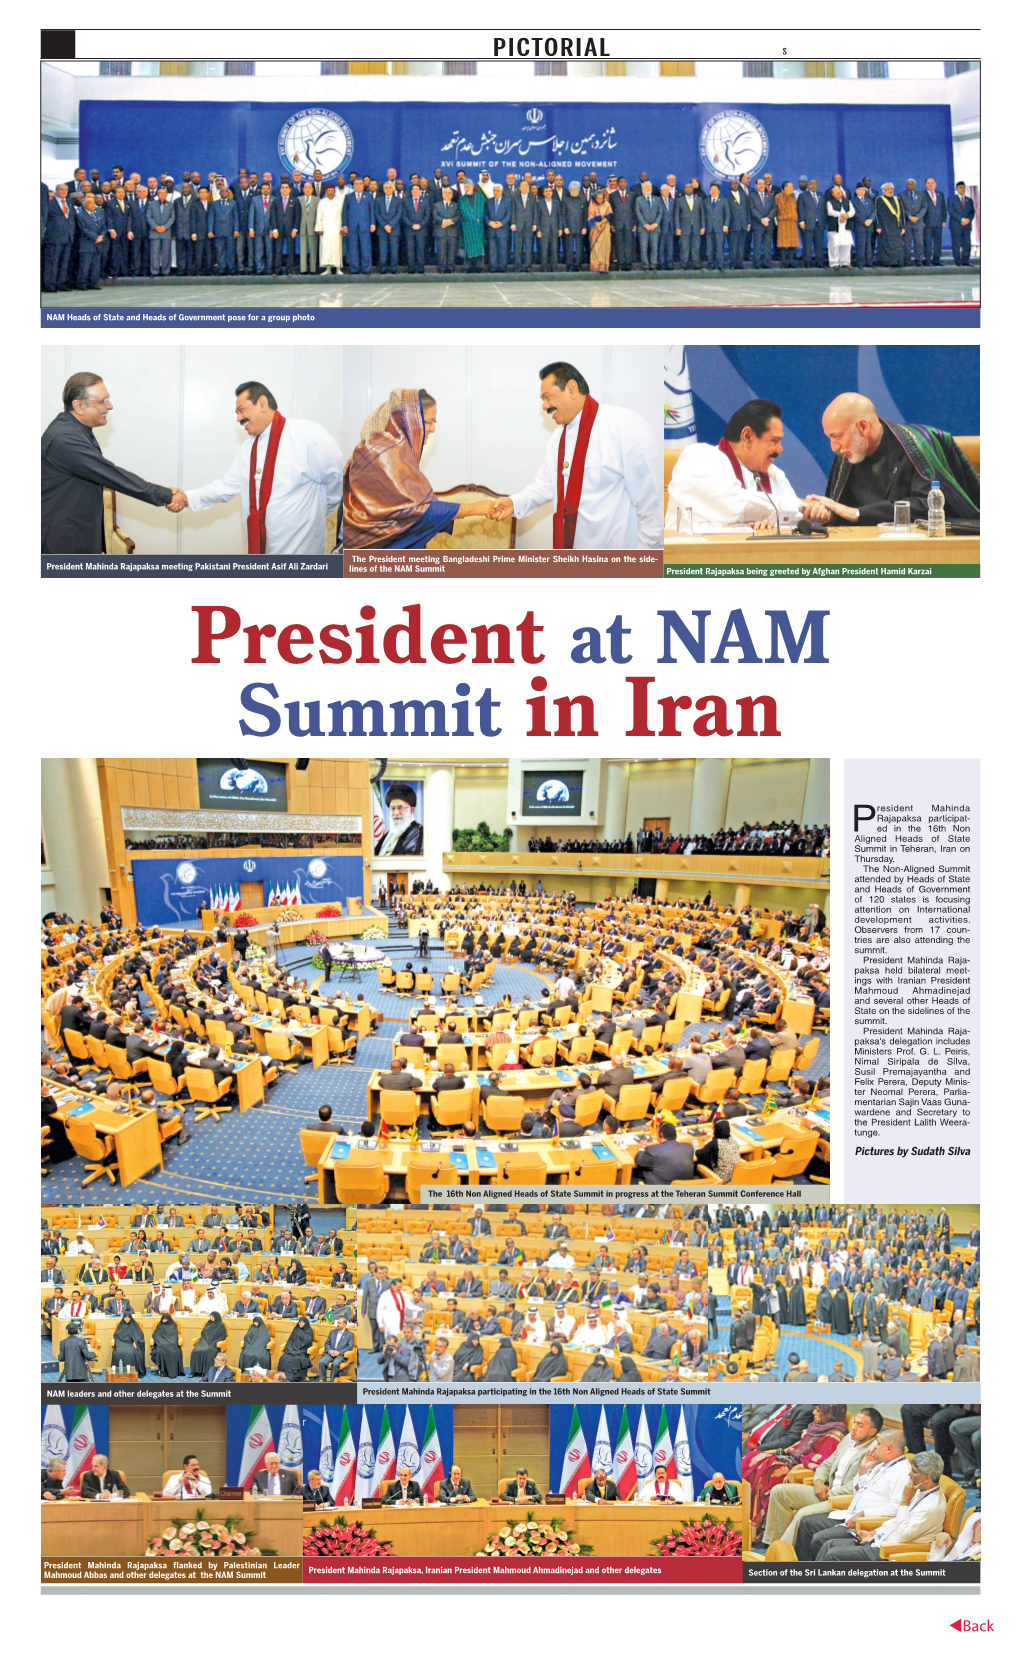 President at NAM Summit in Iran